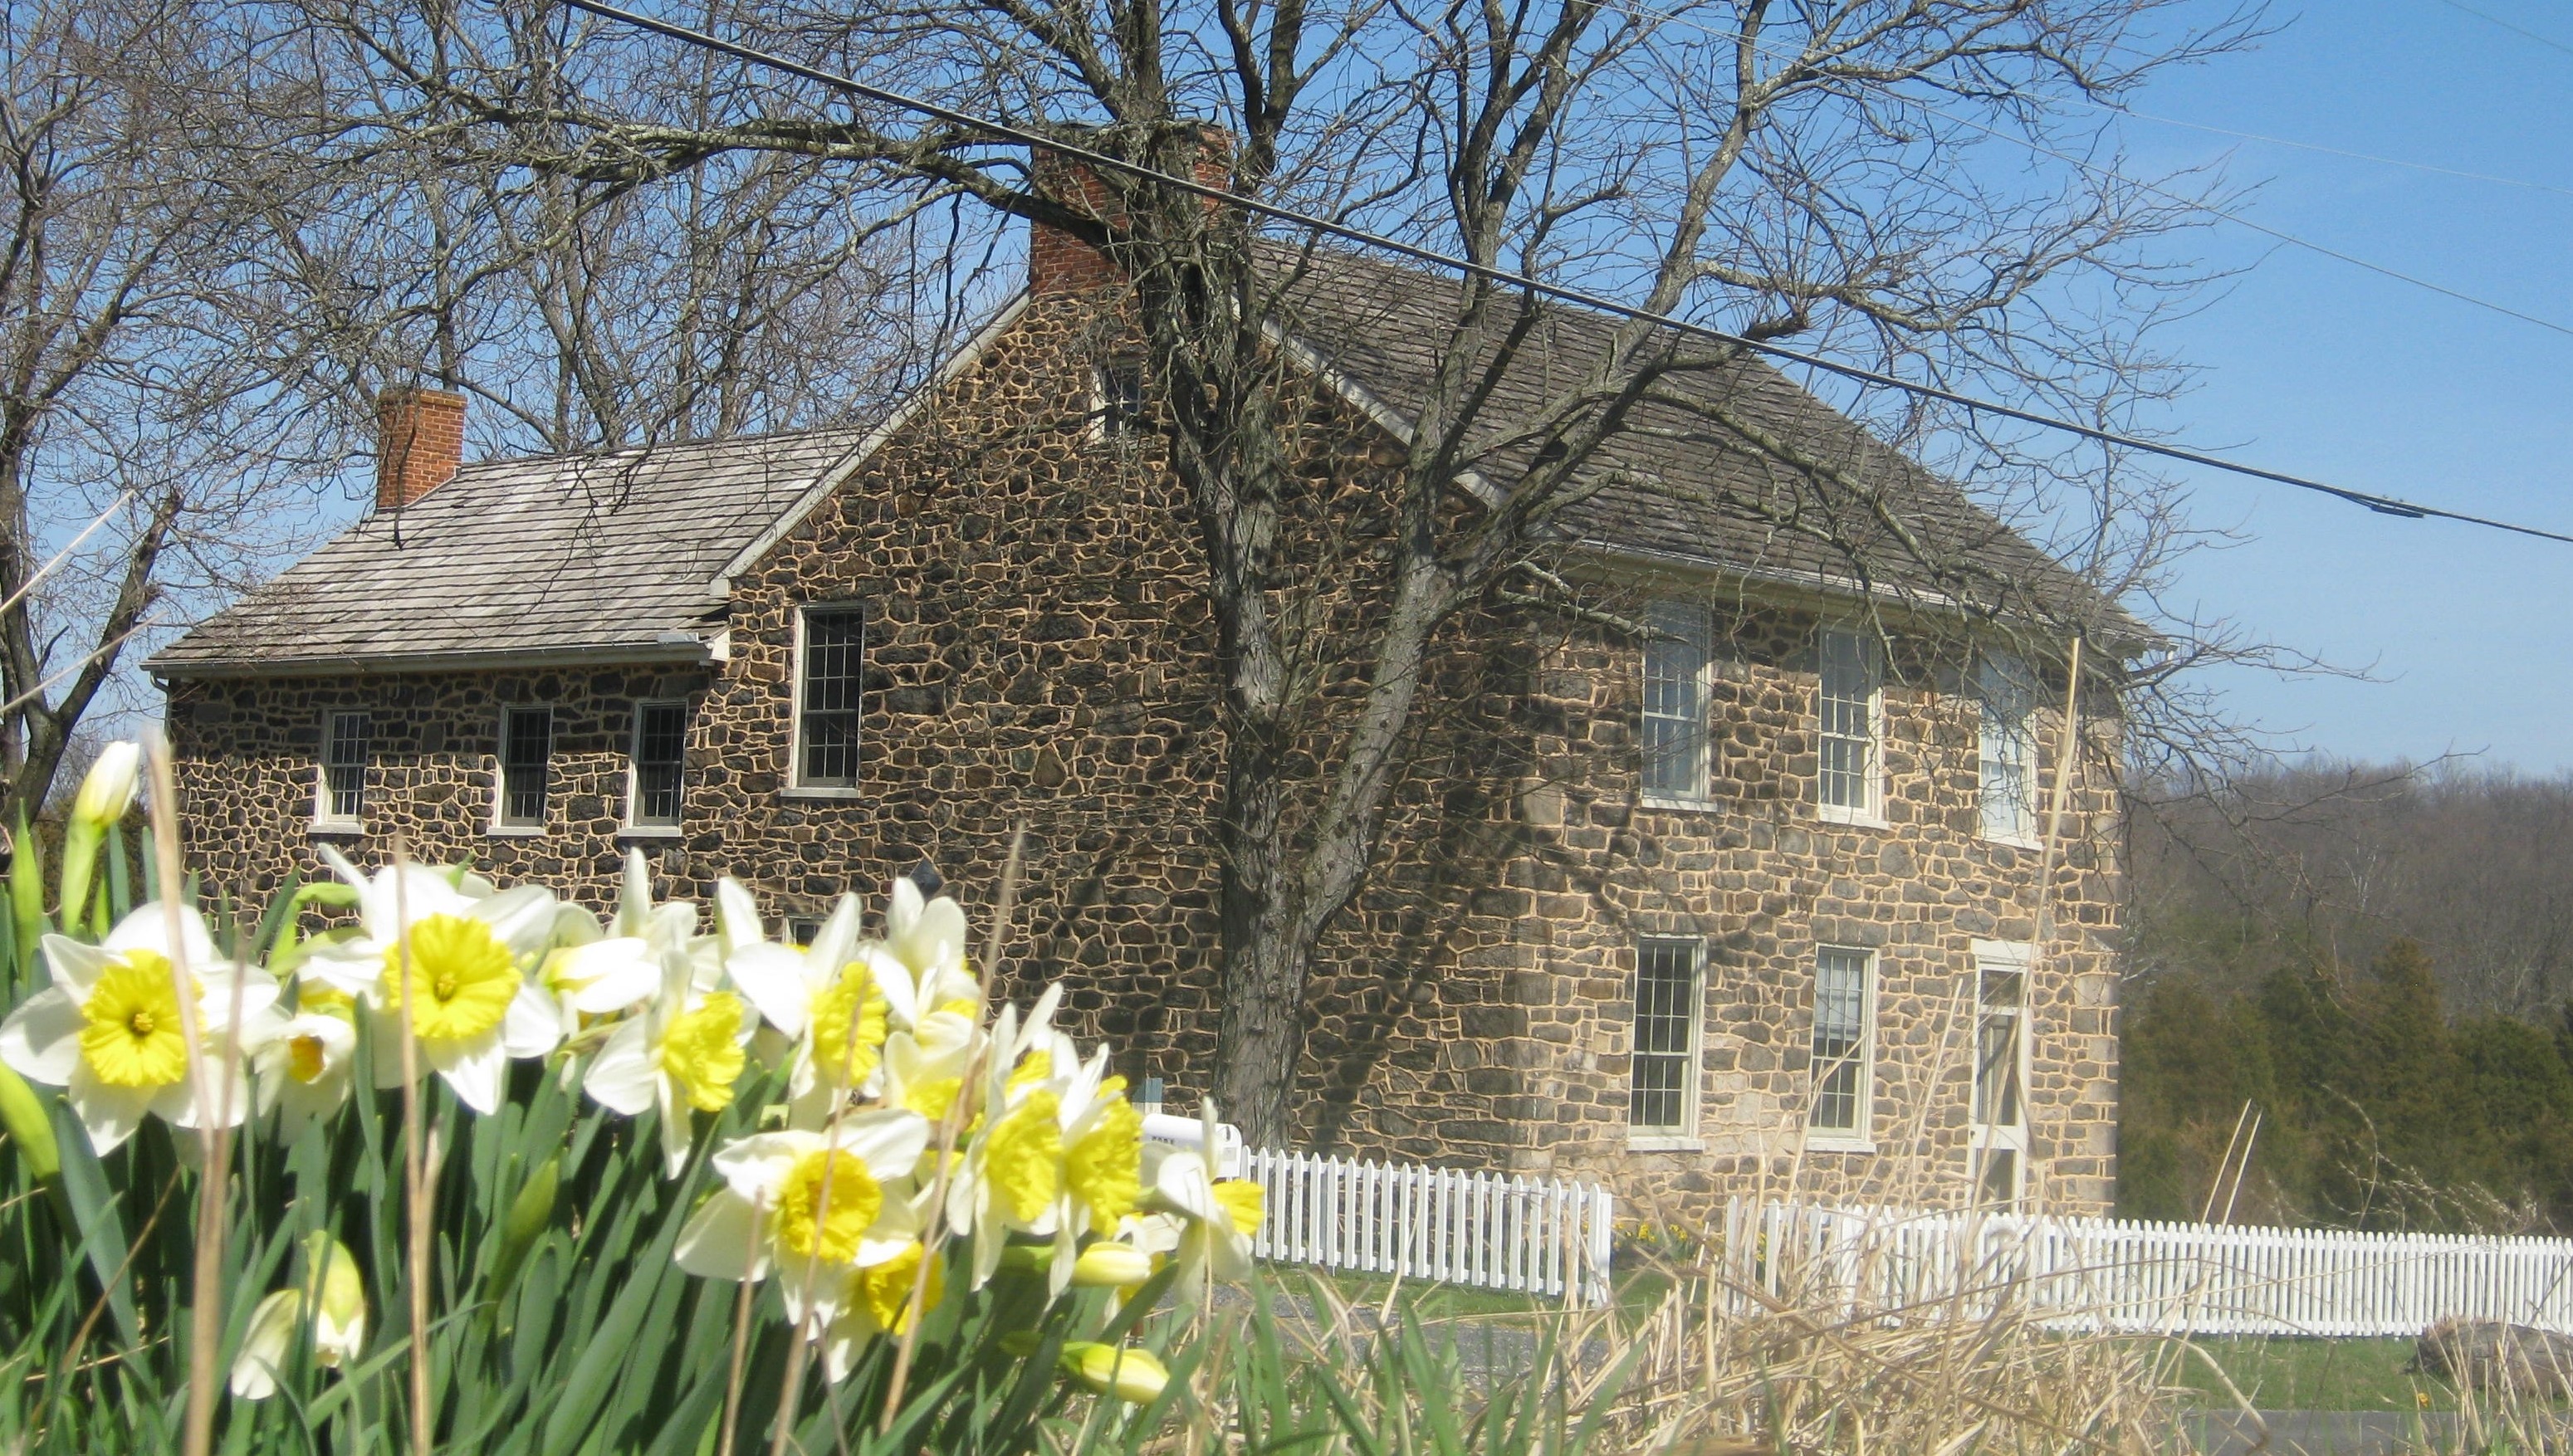 The Historic Daniel Lady Farm